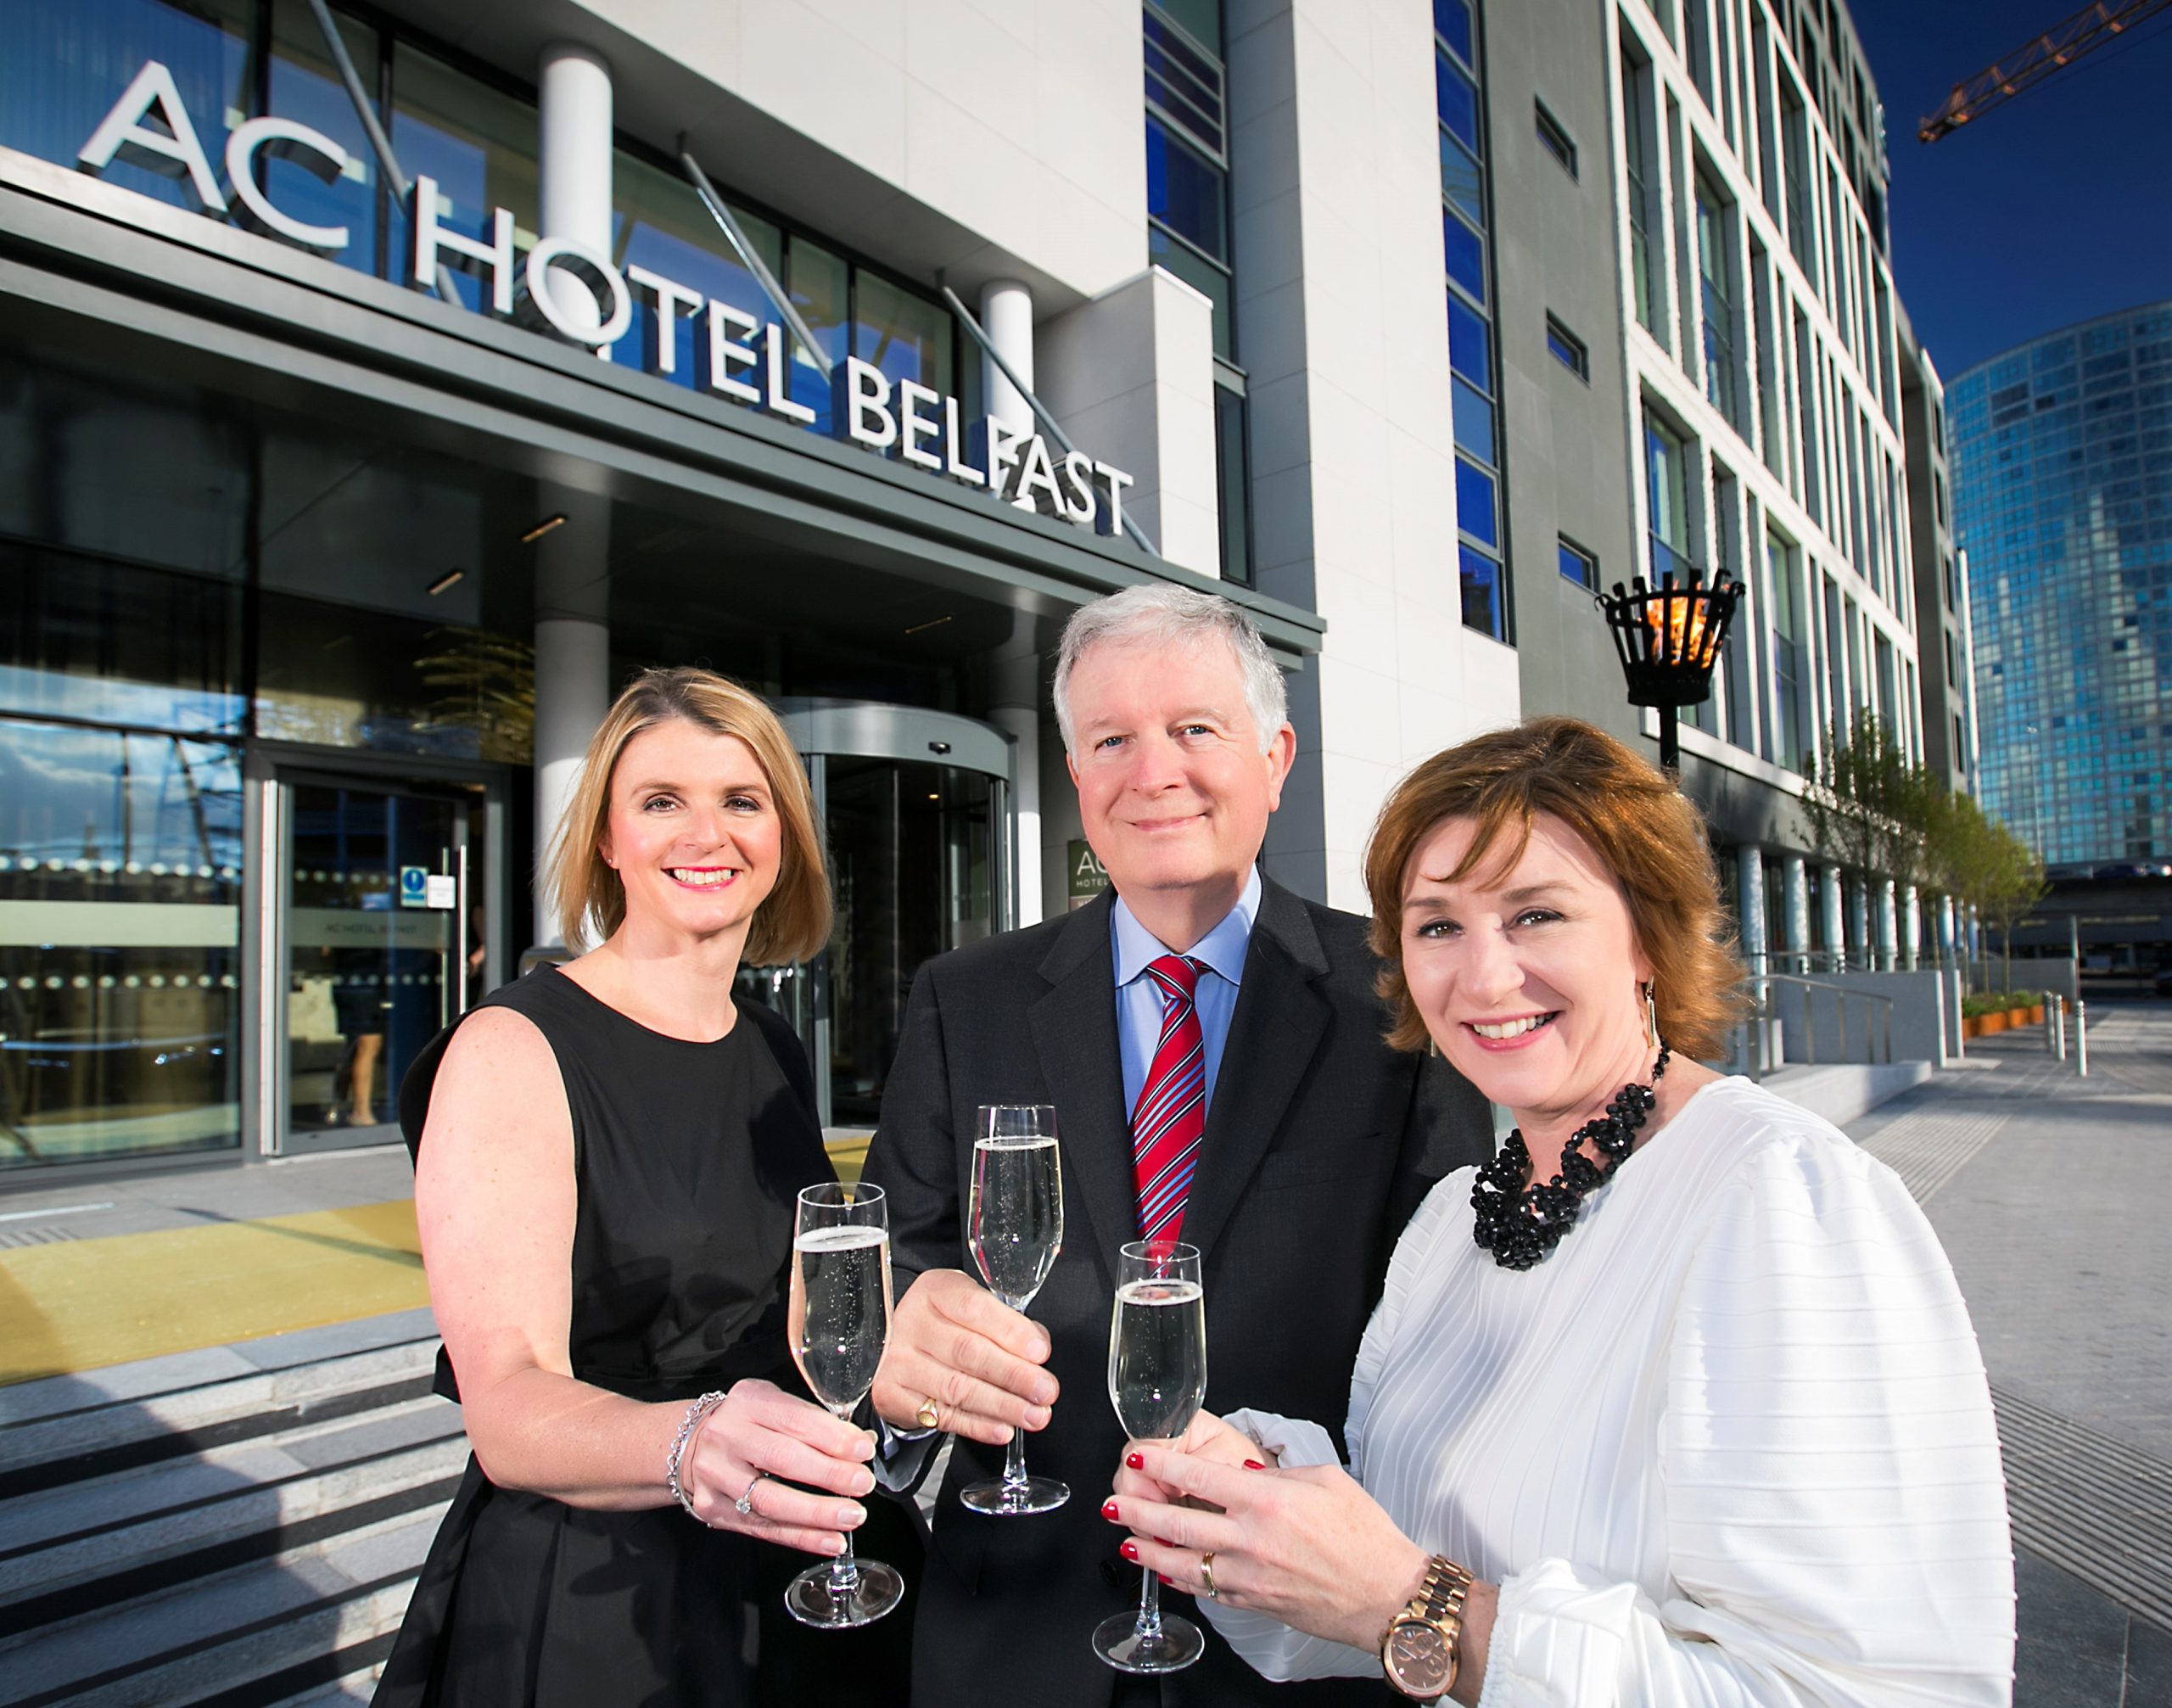 AC Hotel Belfast ‘Flagship Feature’ of City Quays Development